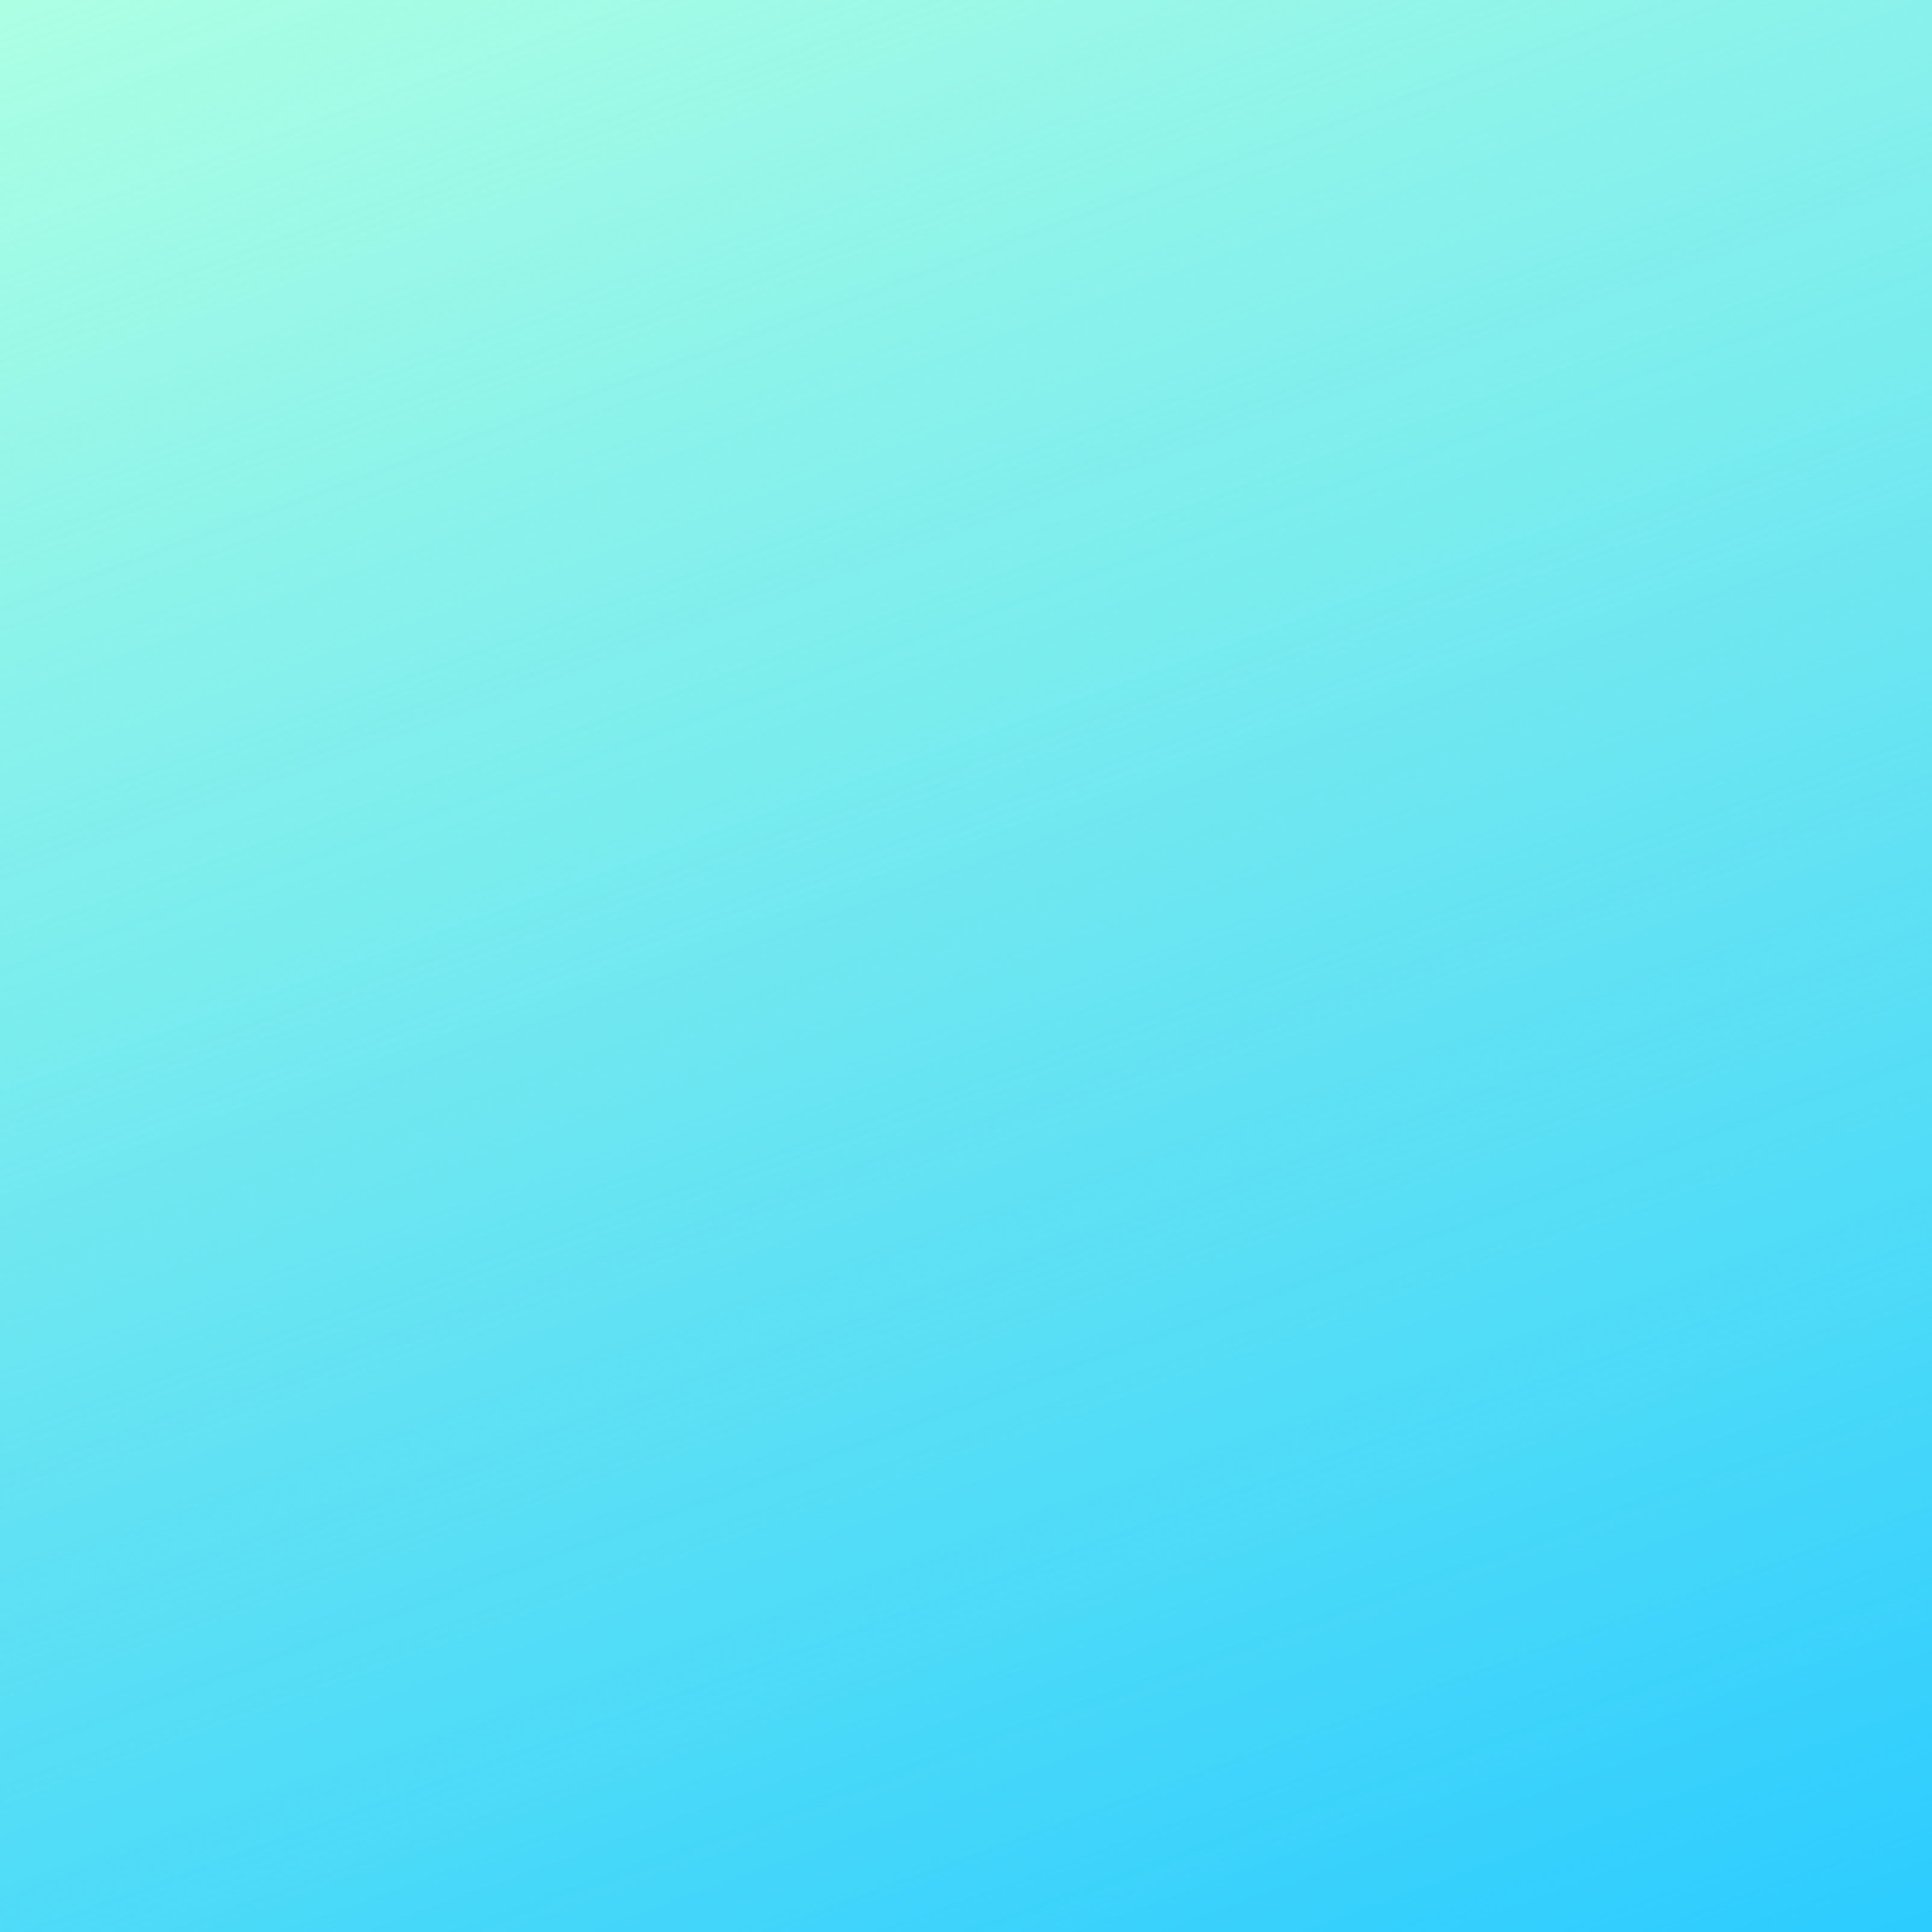 Sky Blue Azure Turquoise Gradient Background iPad Wallpaper